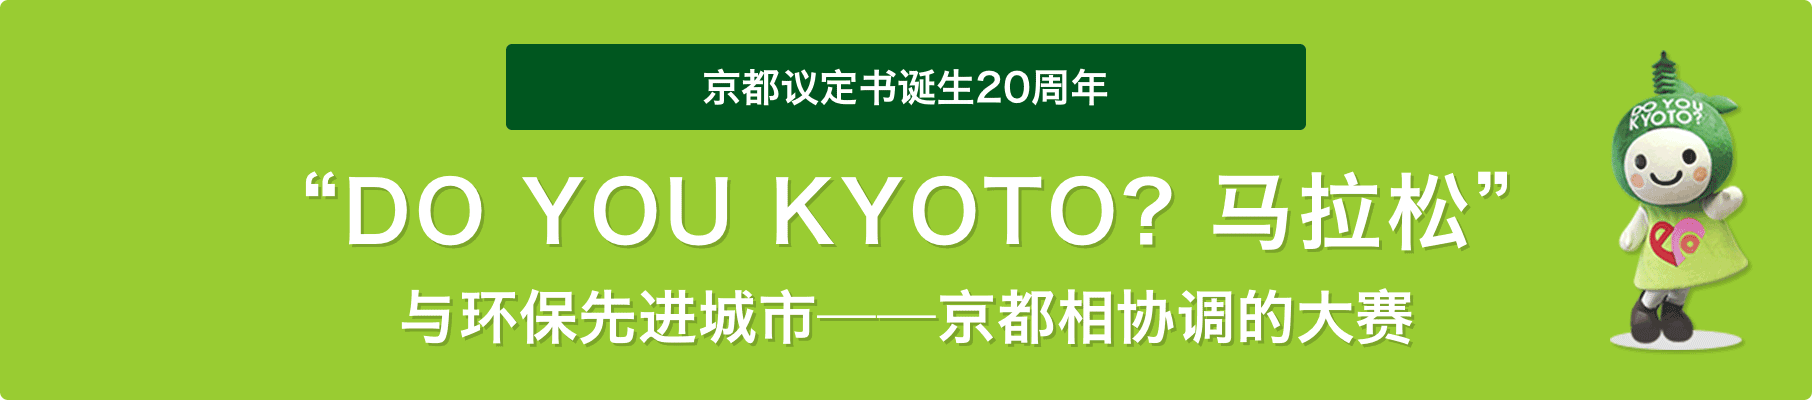 「DO YOU KYOTO？马拉松」与环保先进城市——京都相协调的大赛